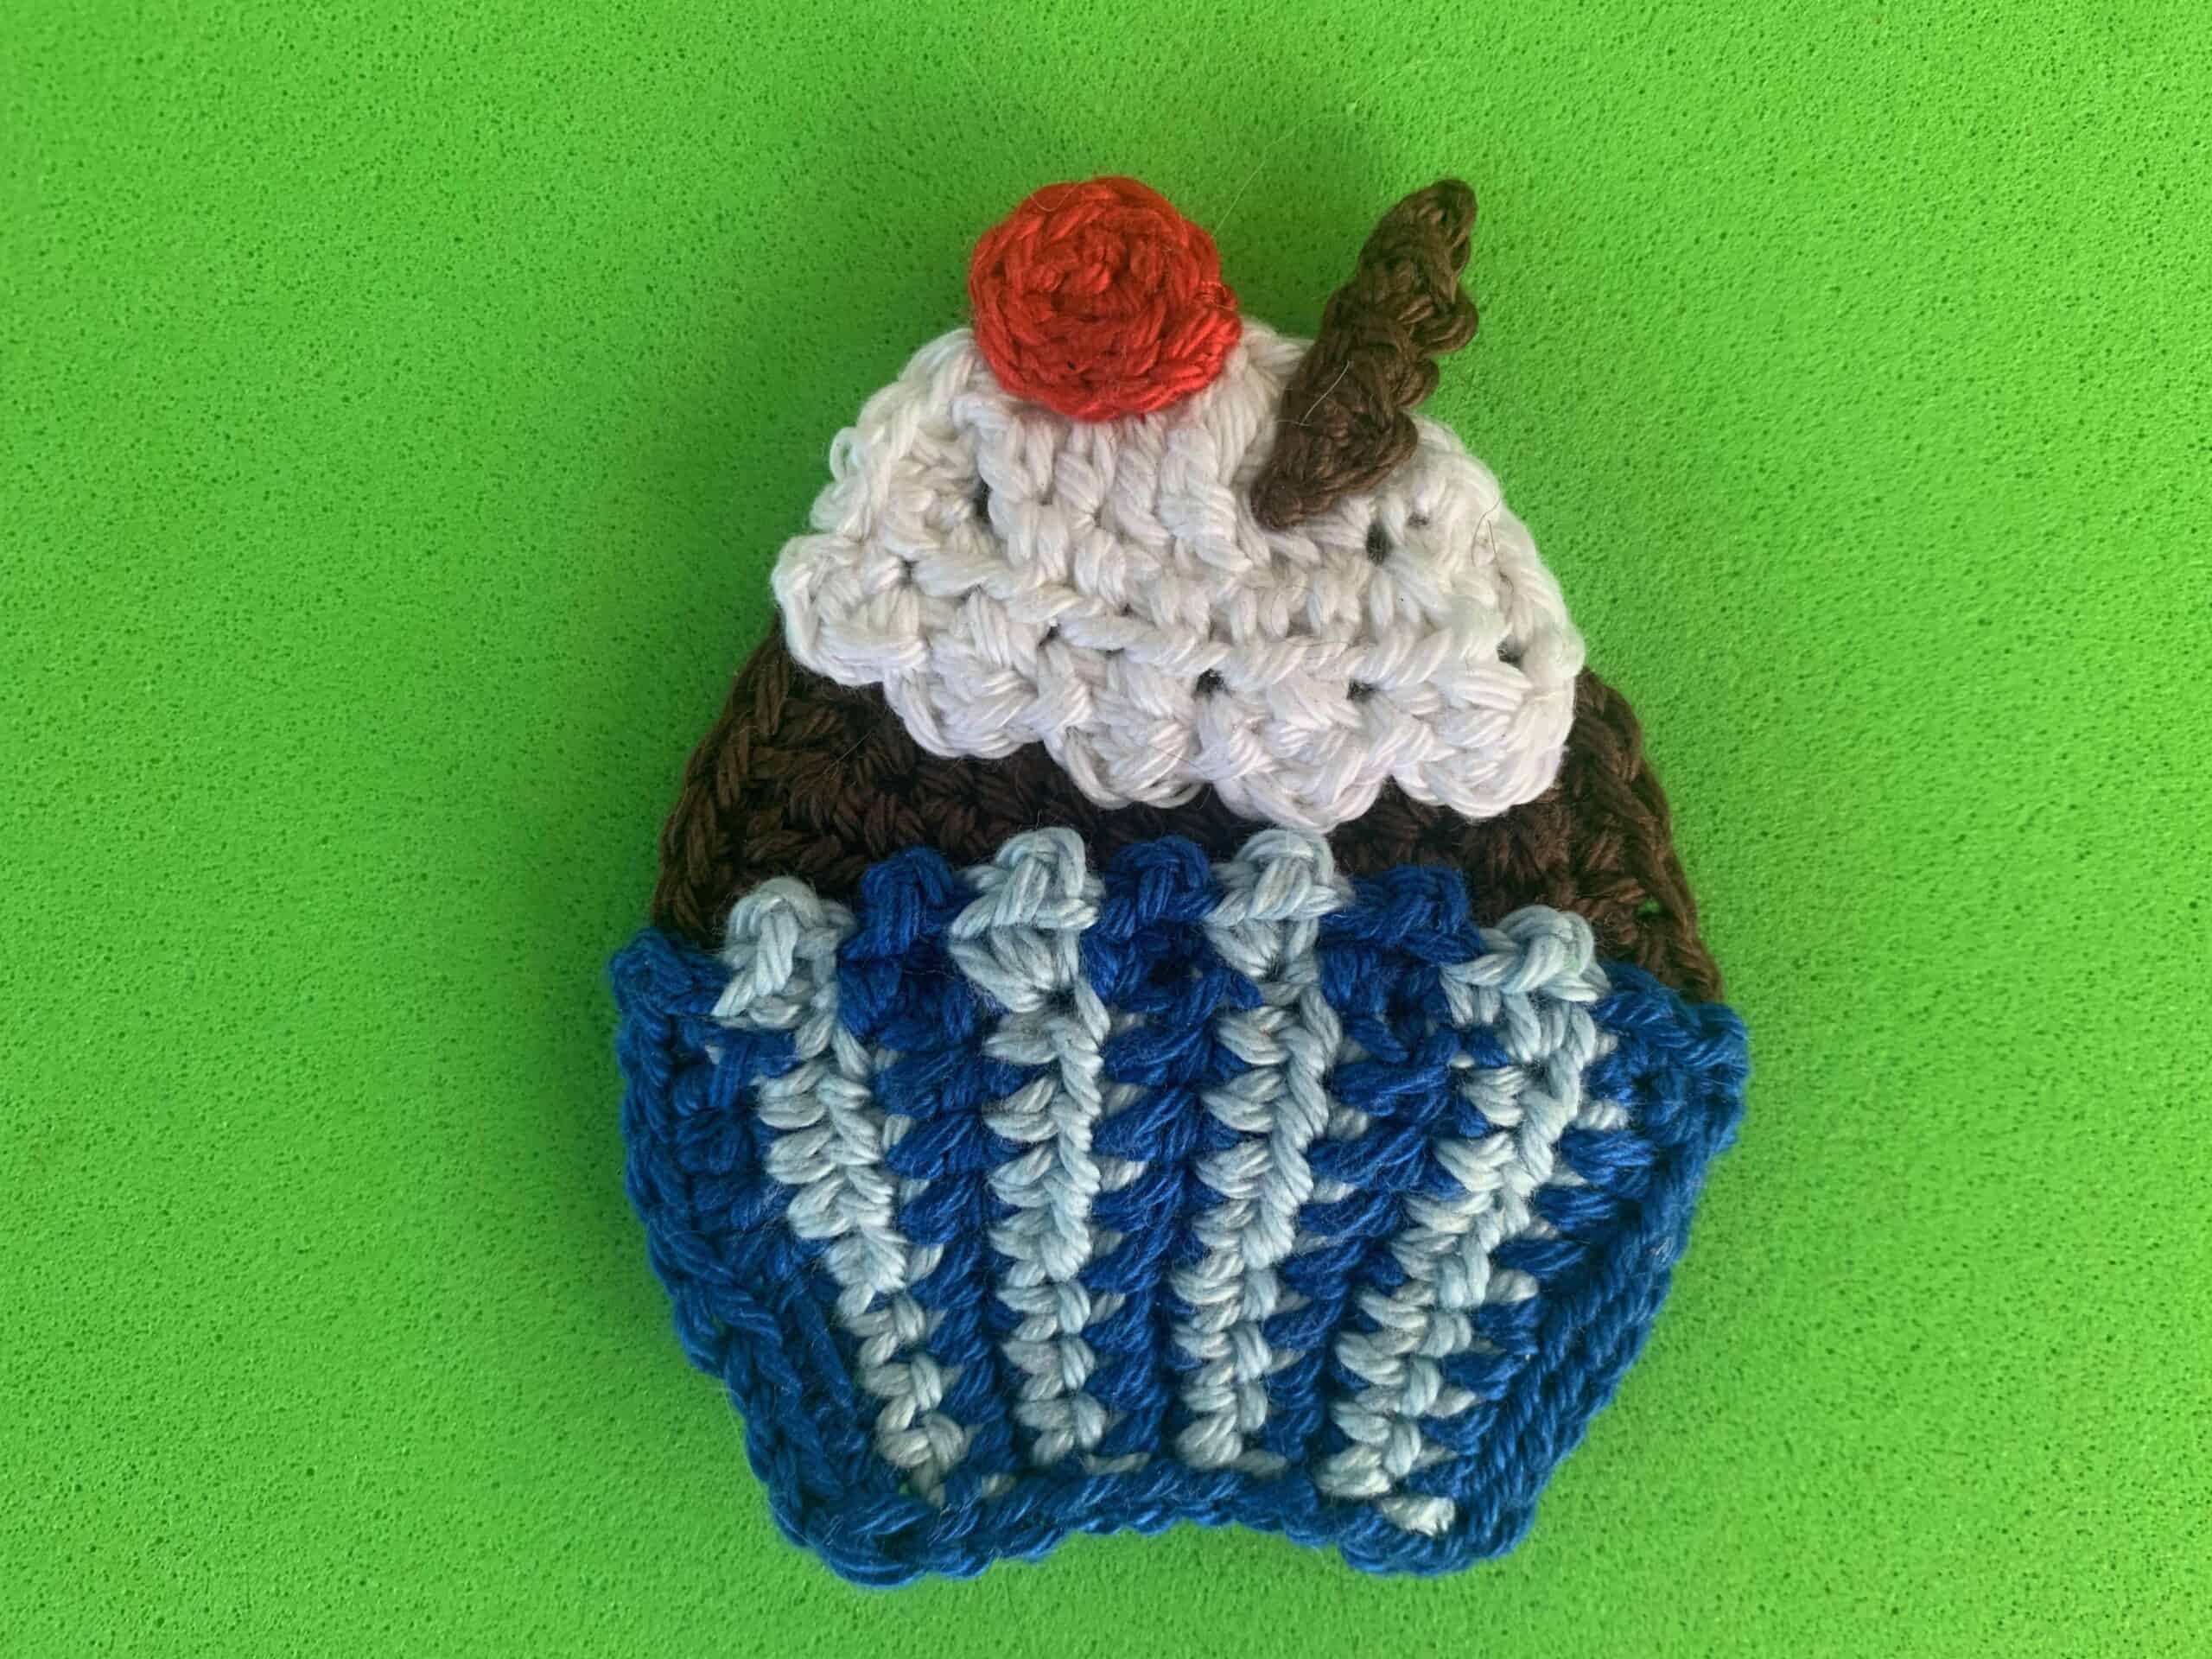 Finished crochet cupcake 4 ply landscape